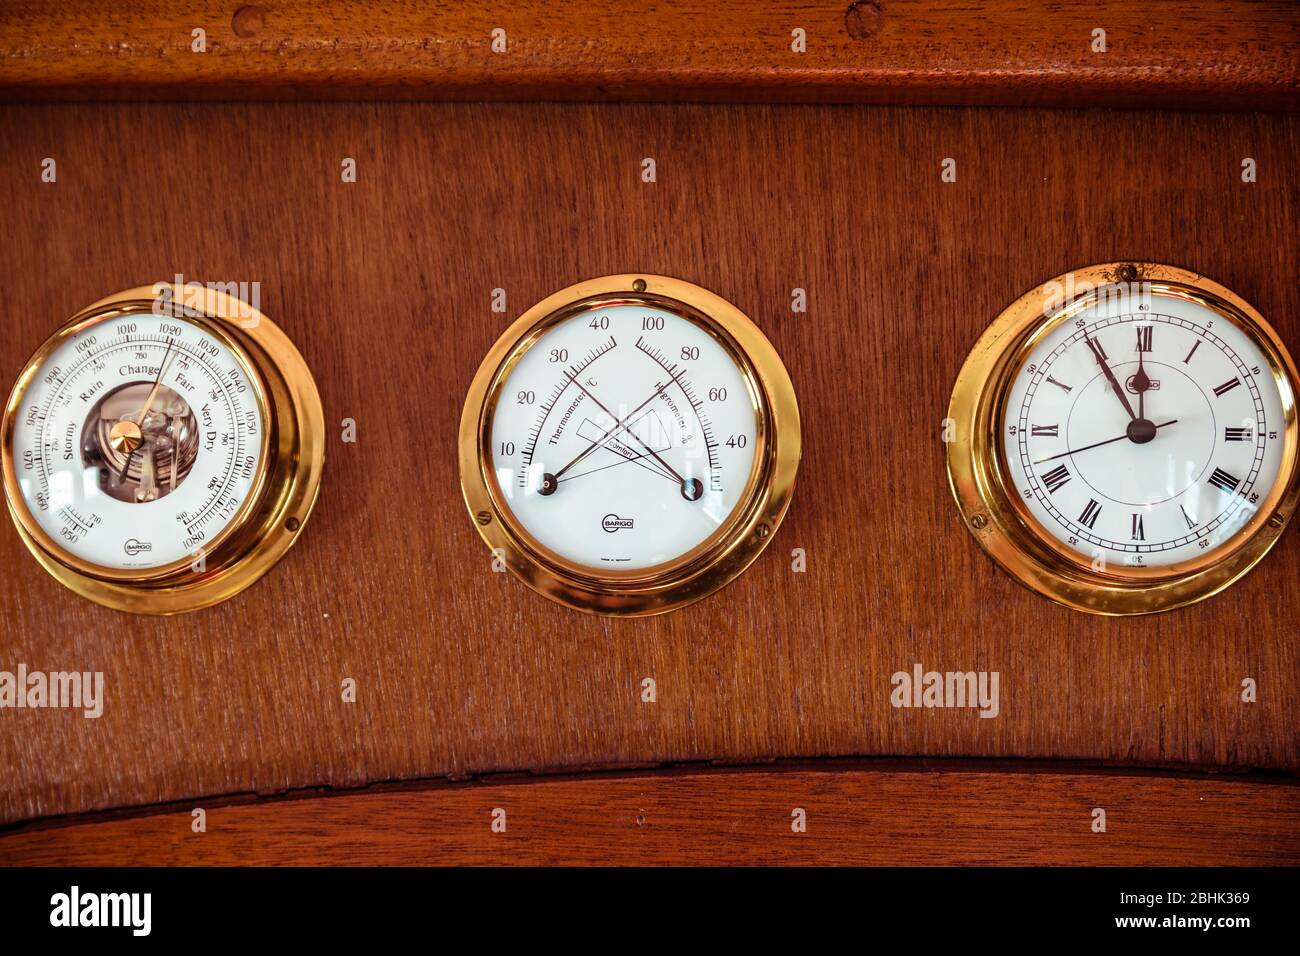 https://c8.alamy.com/comp/2BHK369/a-trio-of-barigo-nautical-instruments-barometer-thermometer-hygrometer-clock-on-a-vintage-boat-2BHK369.jpg